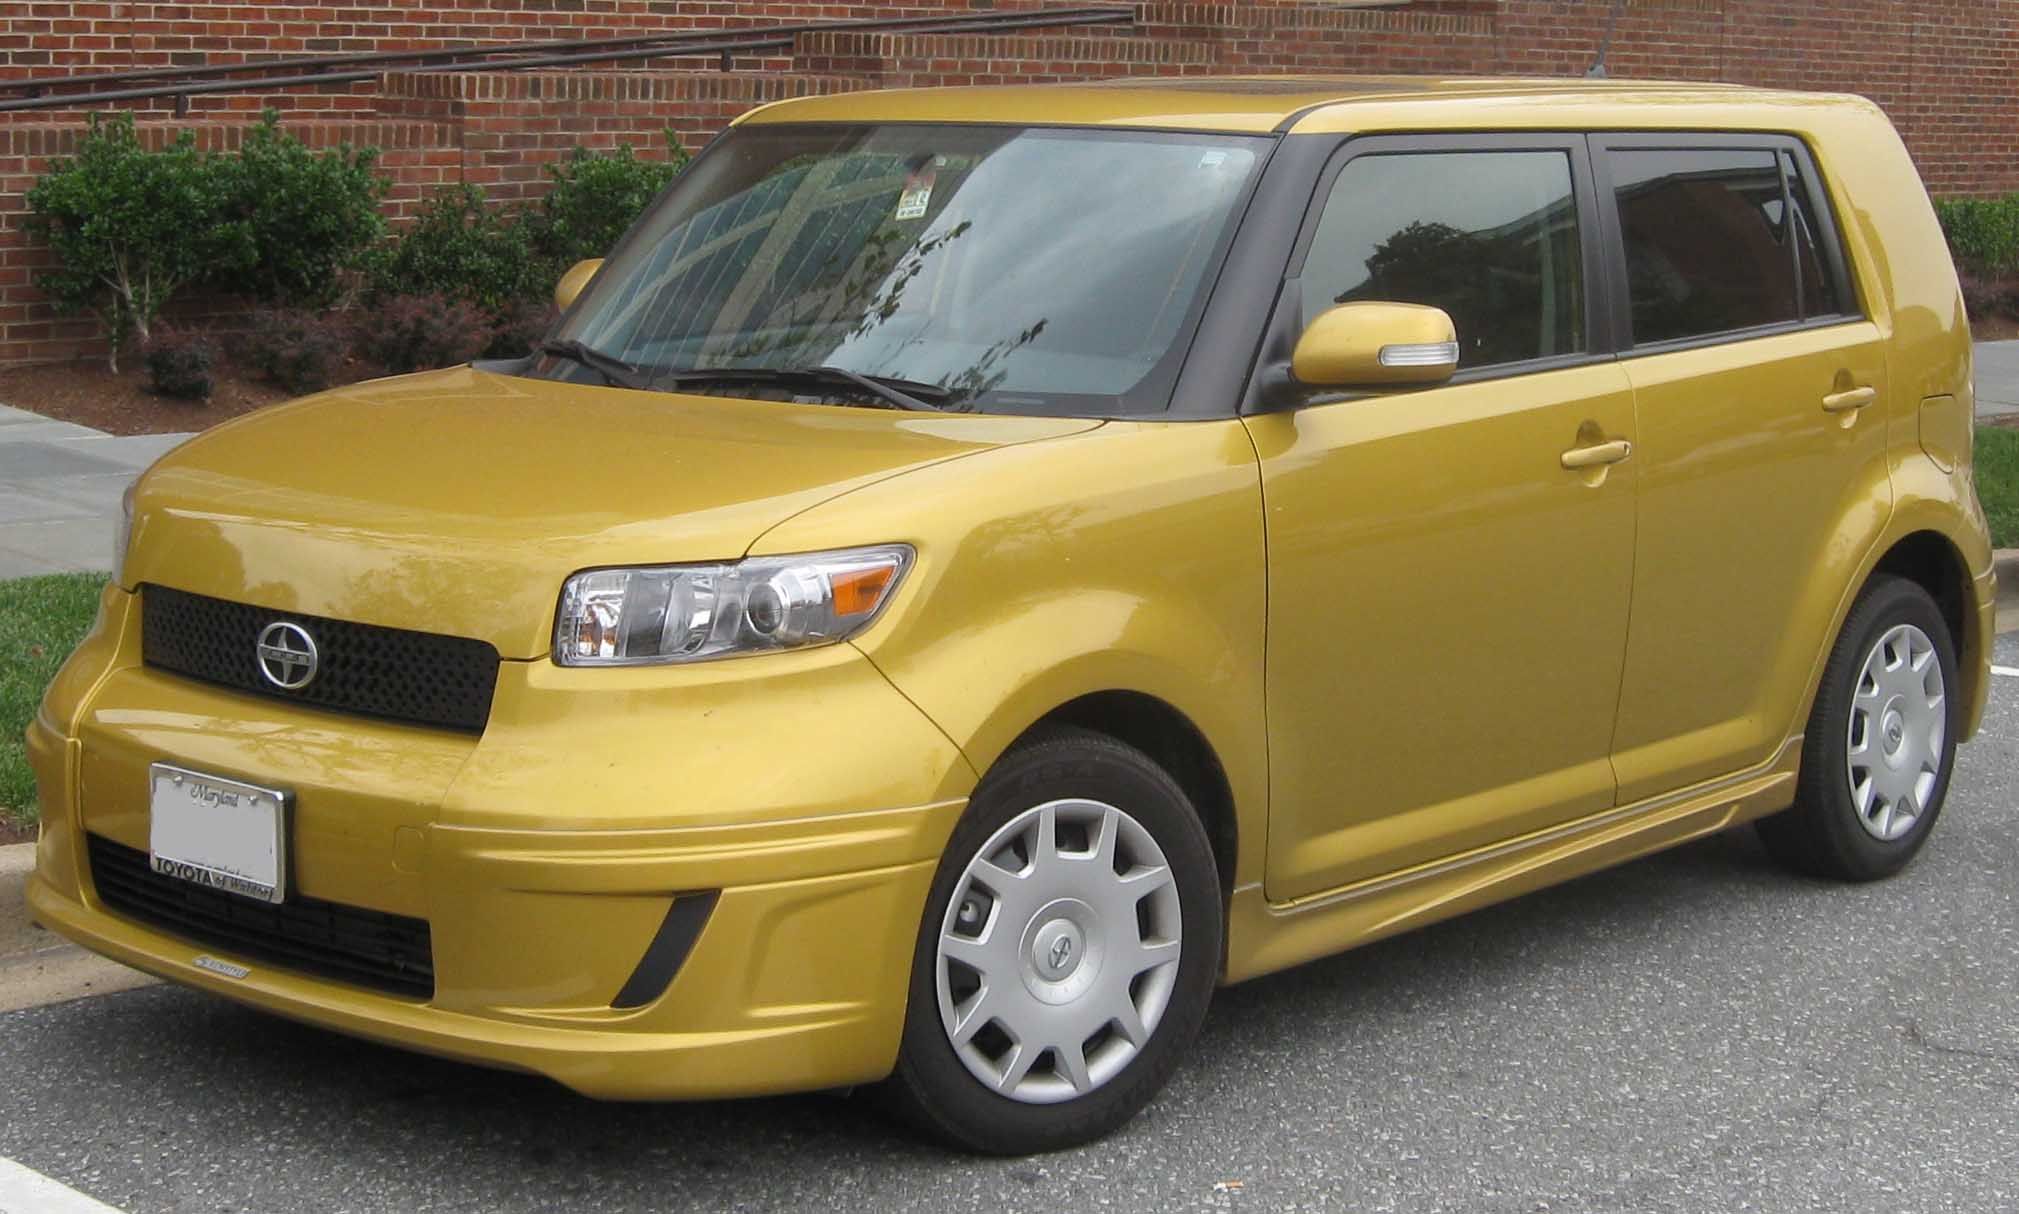 2008 Toyota Scion xB in yellow